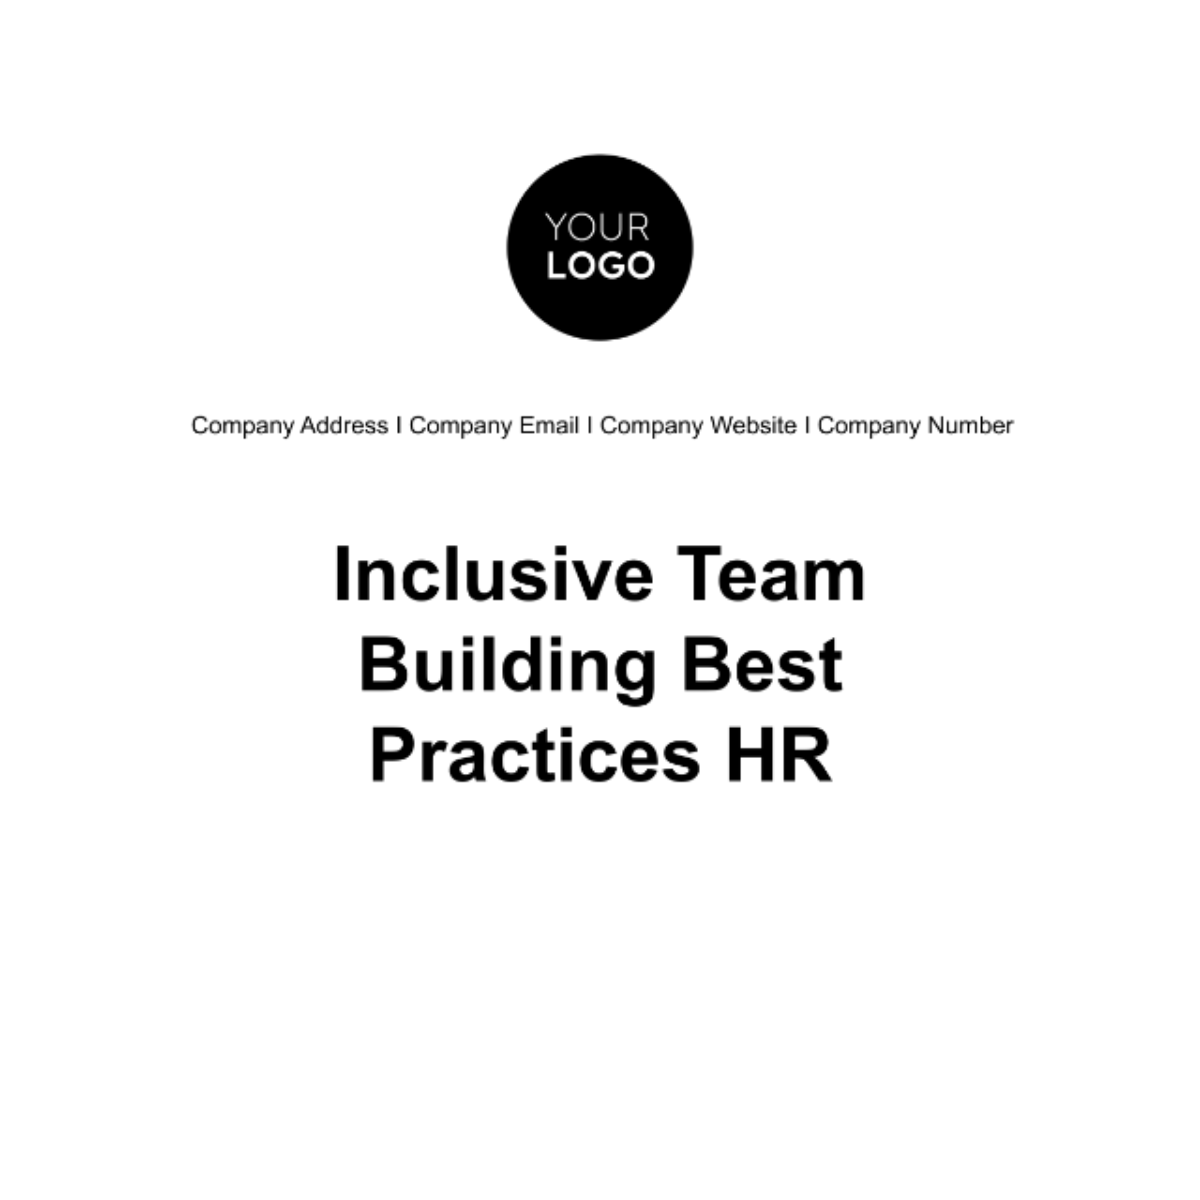 Inclusive Team Building Best Practices HR Template